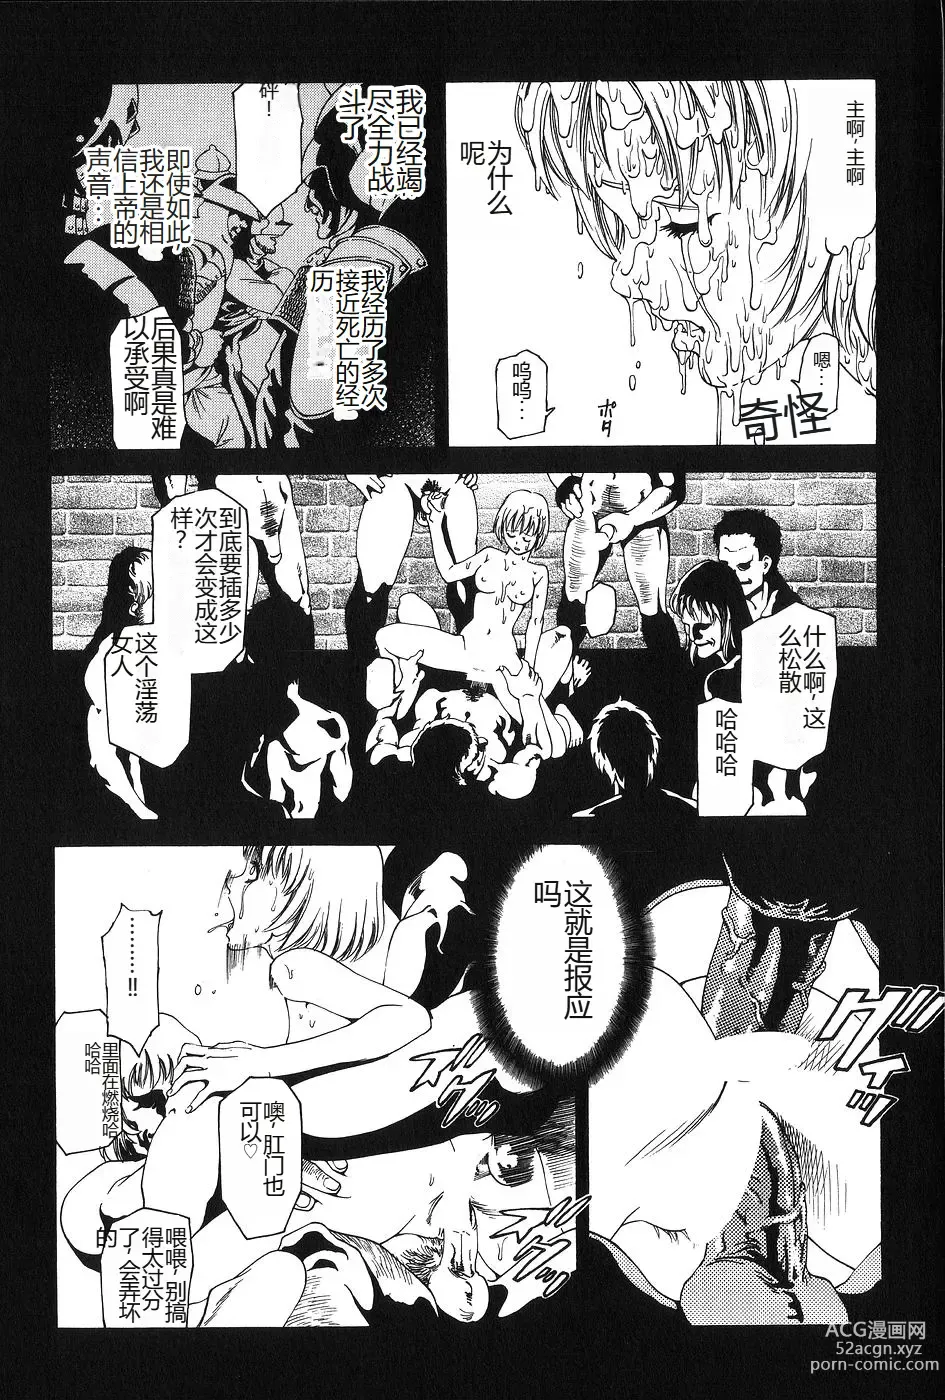 Page 189 of manga Dark Age